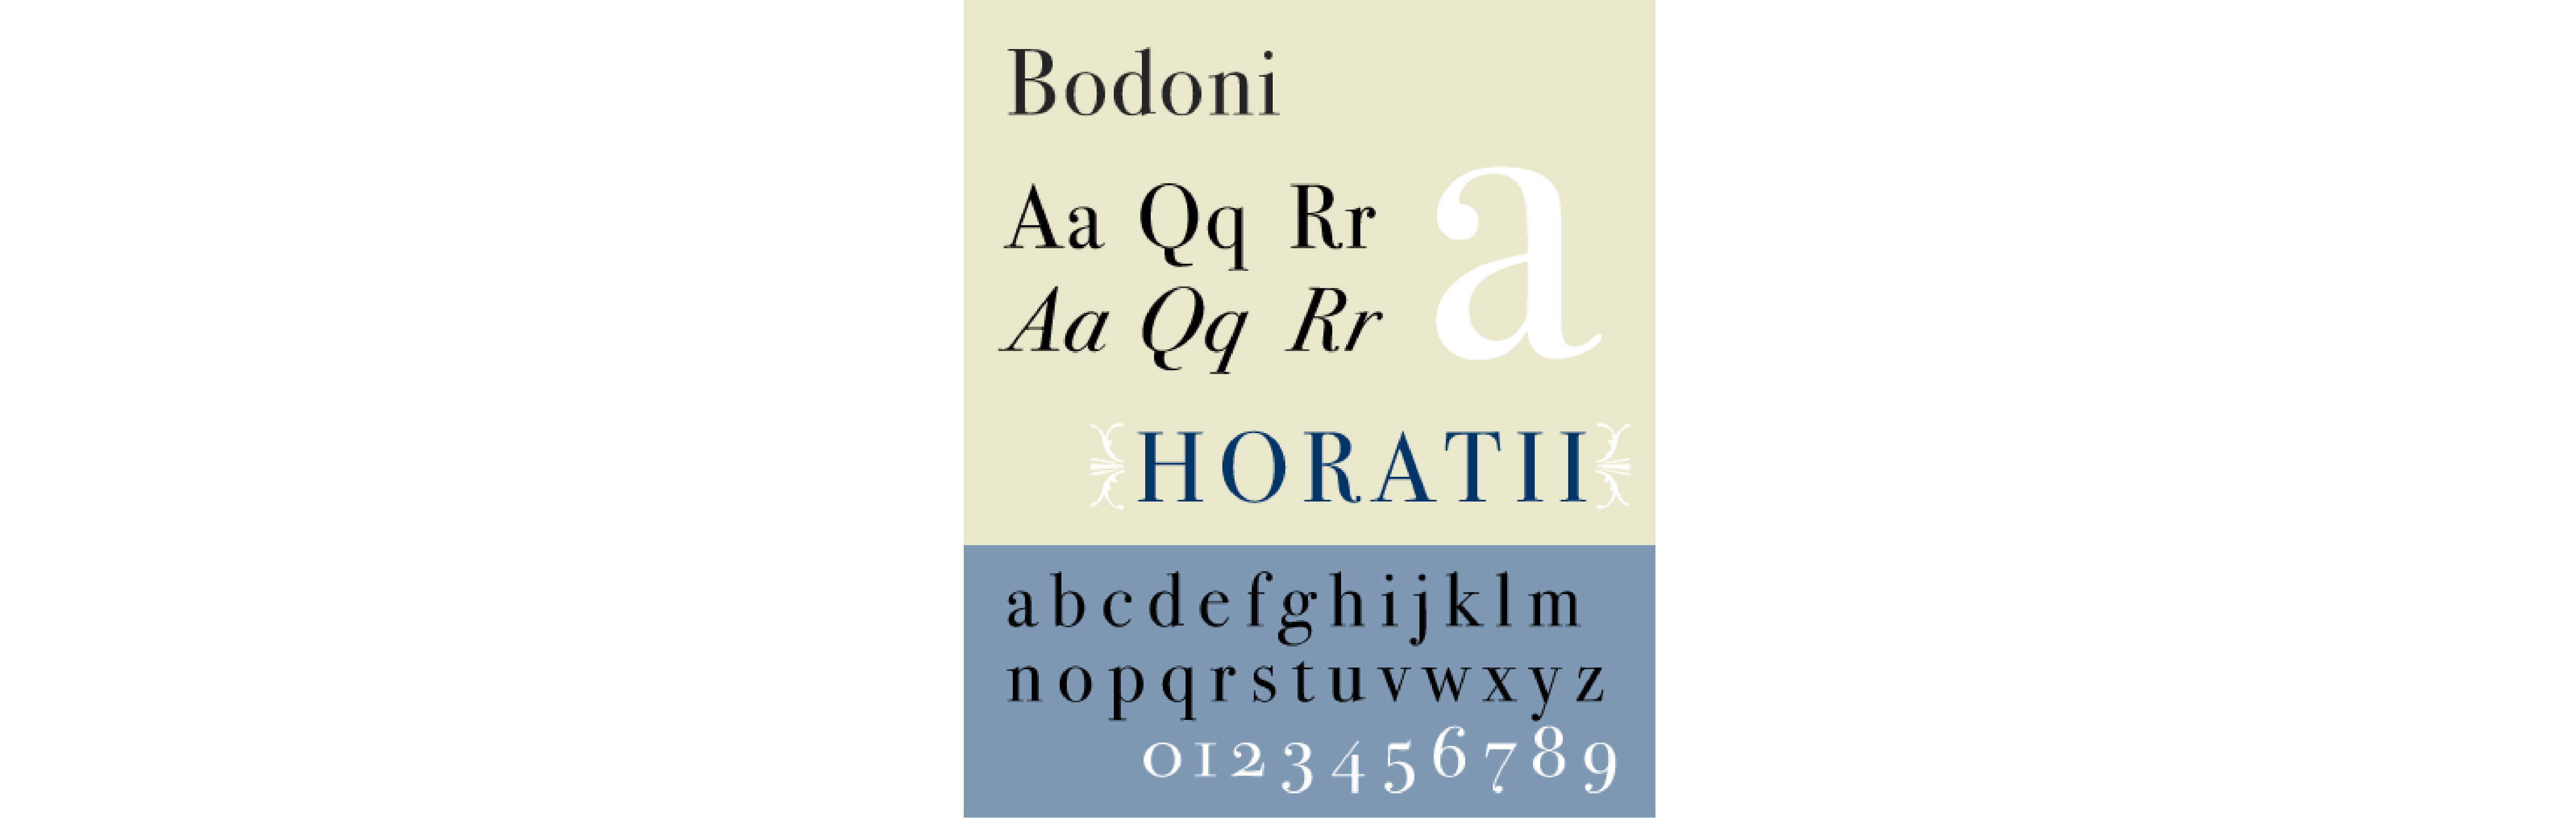 The Bodoni Typeface. 